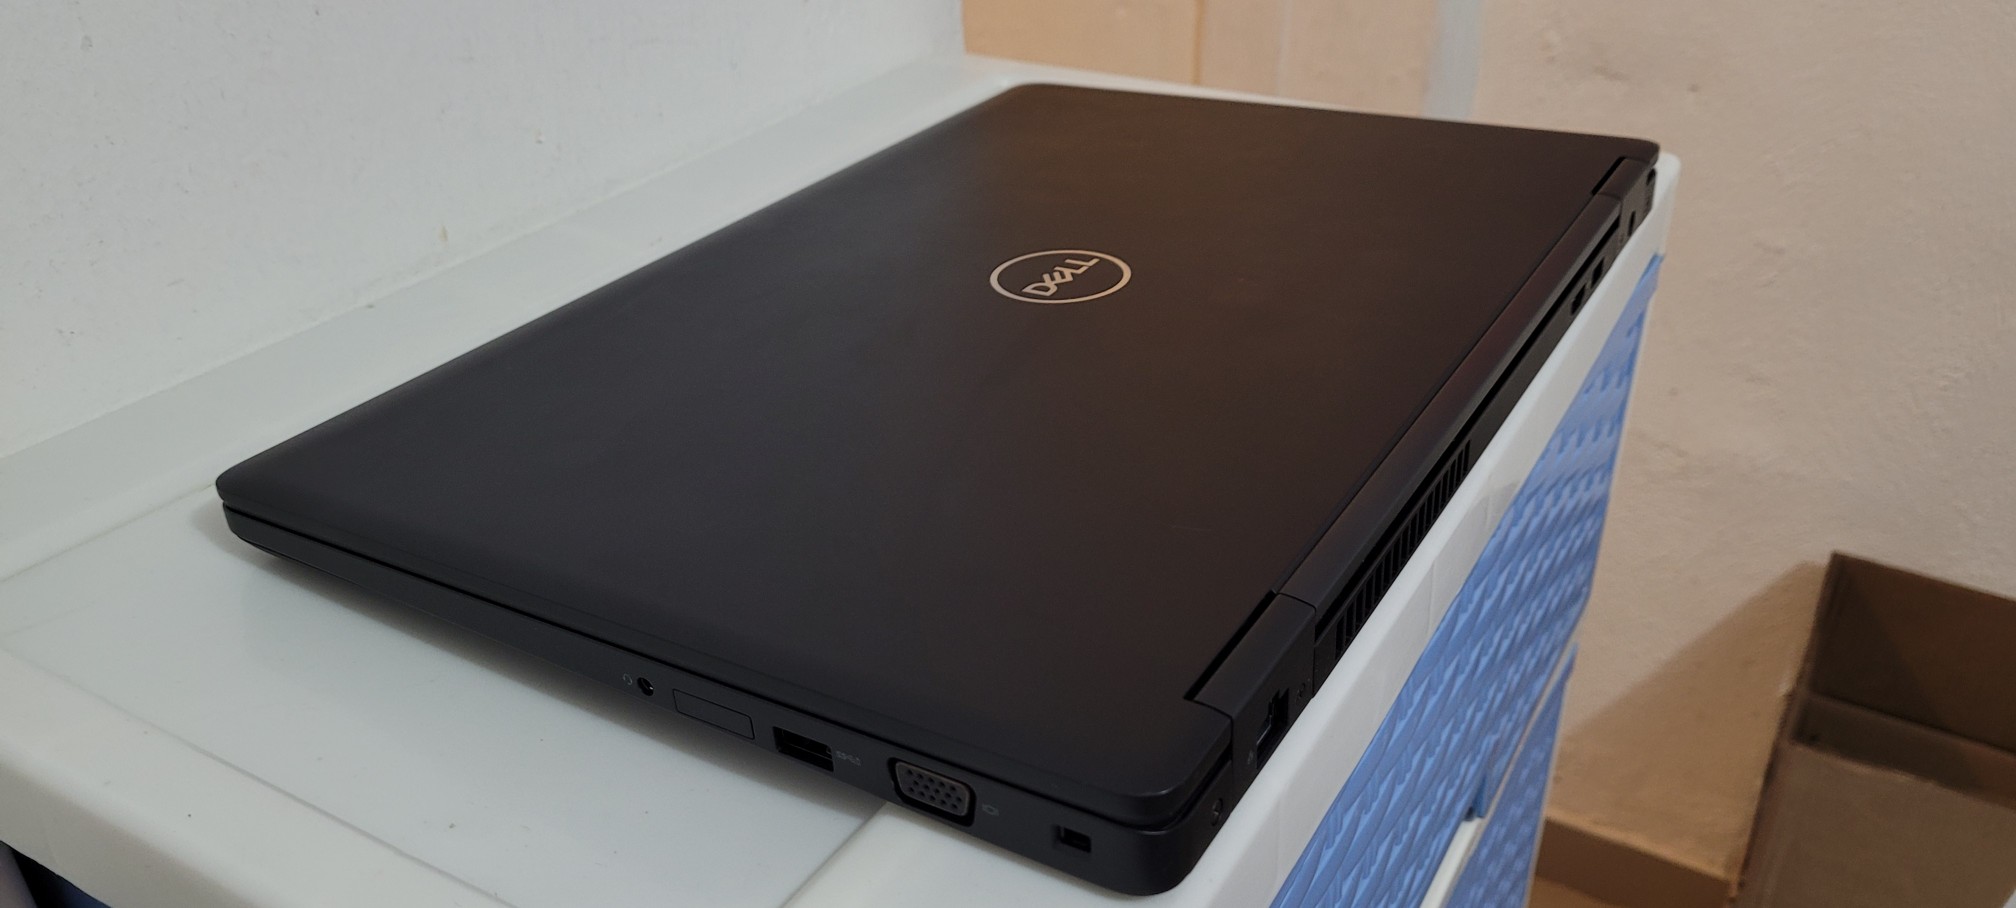 computadoras y laptops - Dell 5470 14 Pulg Core i7 6ta Gen Ram 8gb ddr4 Disco 256gb Solido 2